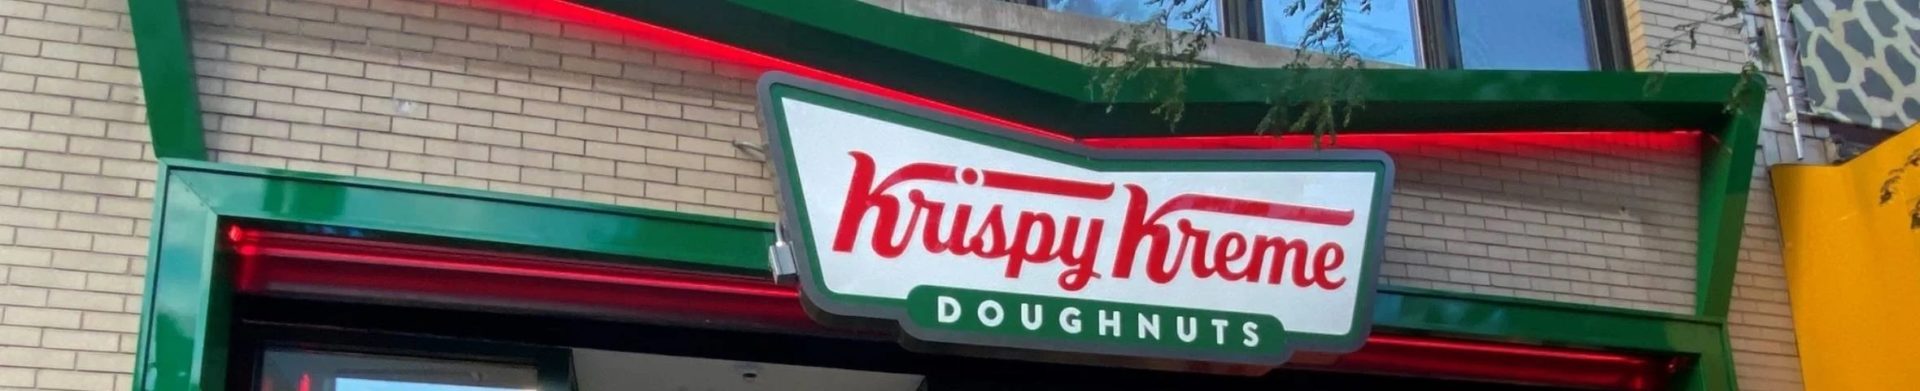 Krispy Kreme storefront in the daytime